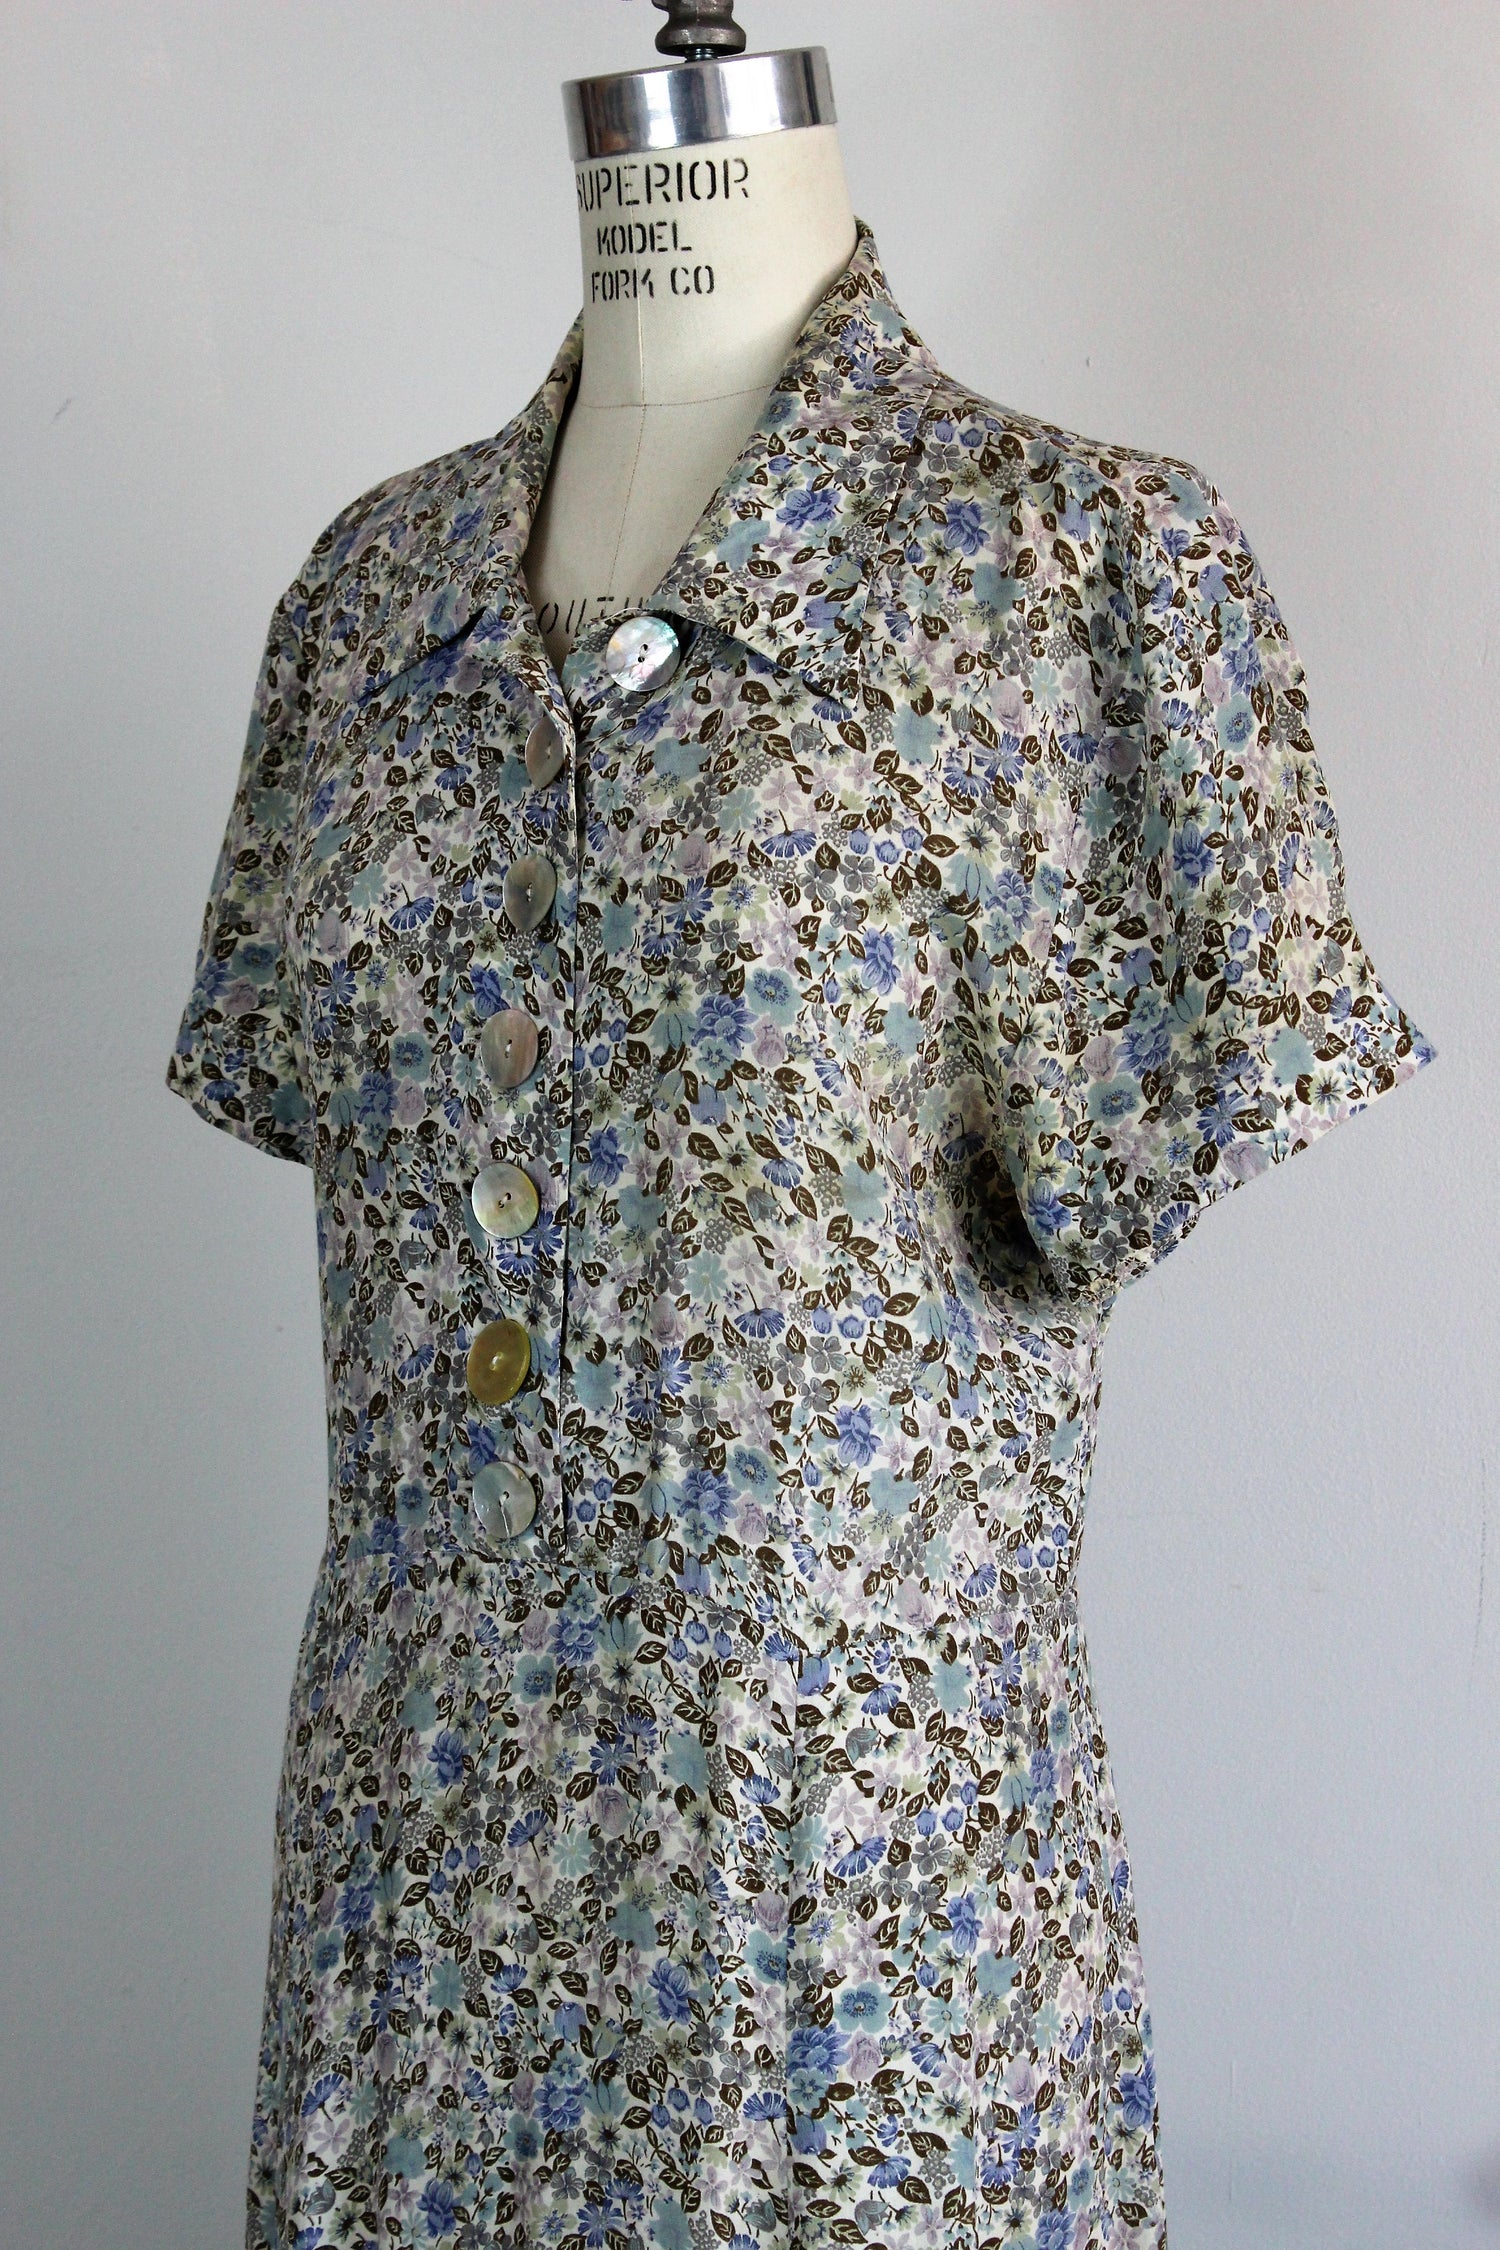 Vintage 1980s Does 1940s Floral Print Dress / Broomskirts by Lucia Lukken